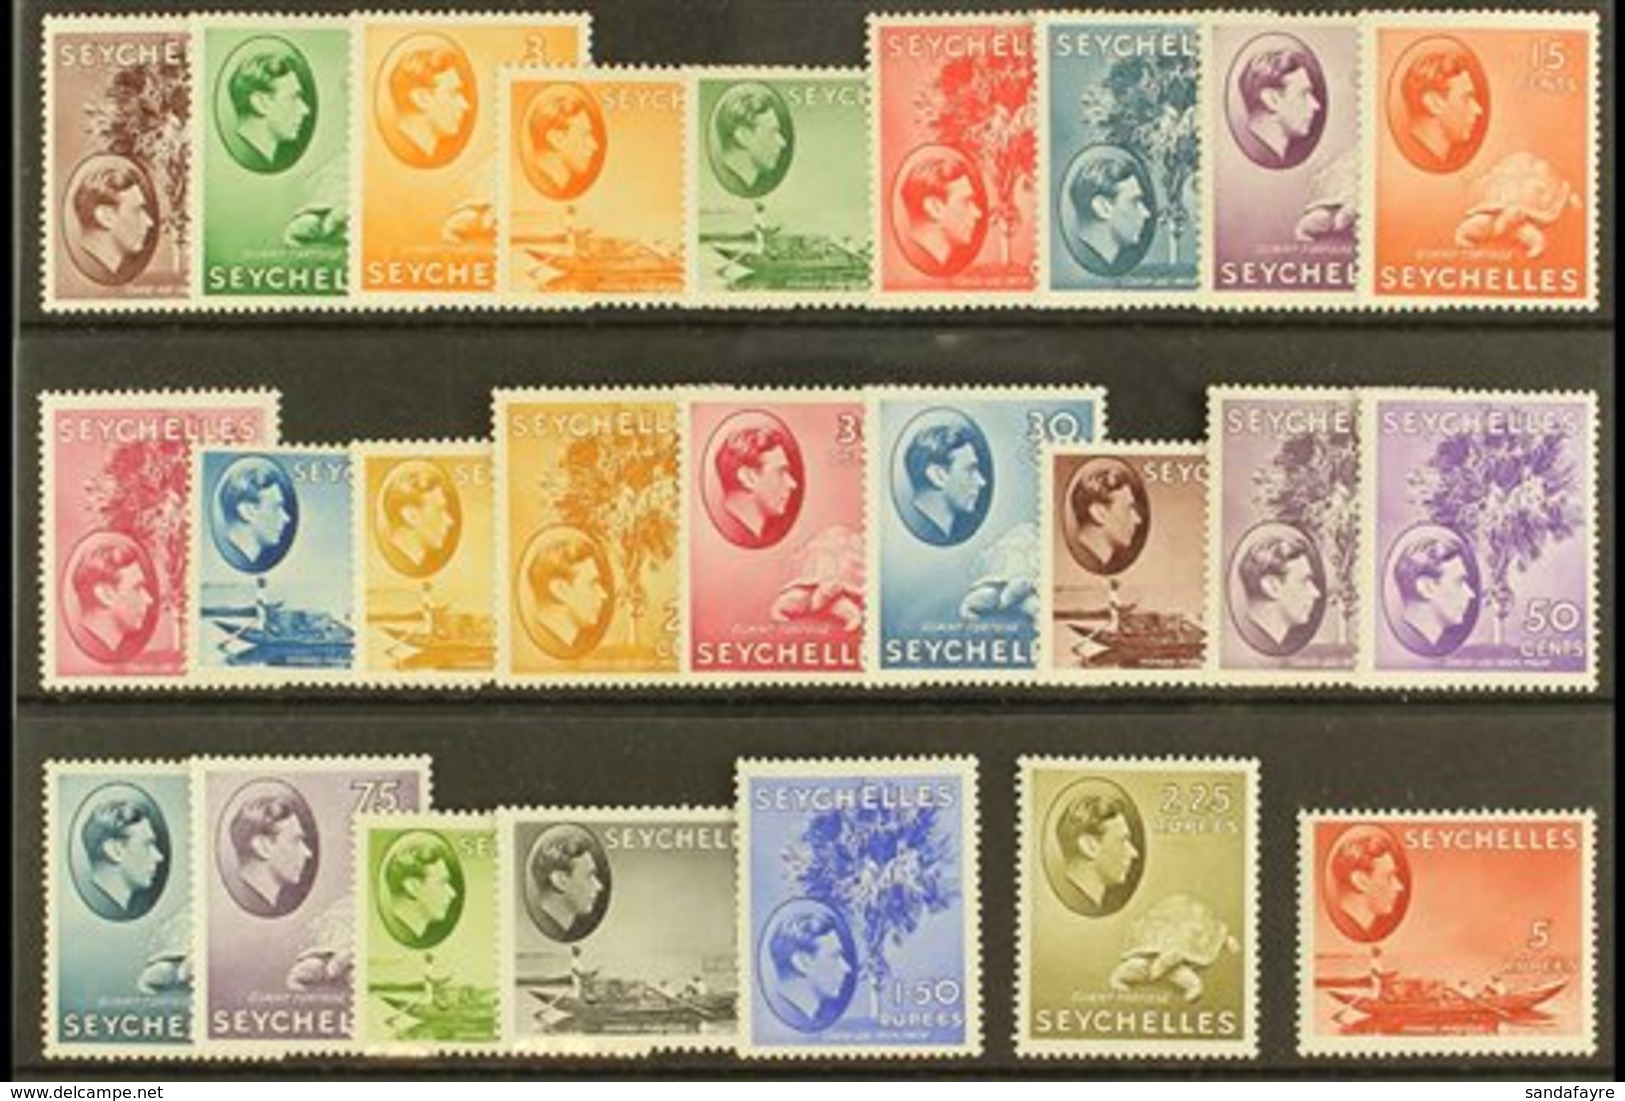 1938-49 Pictorial Definitives Set Complete, SG 135/49, Never Hinged Mint, The 12c, 25c, 30c Carmine Values Lightly Hinge - Seychellen (...-1976)